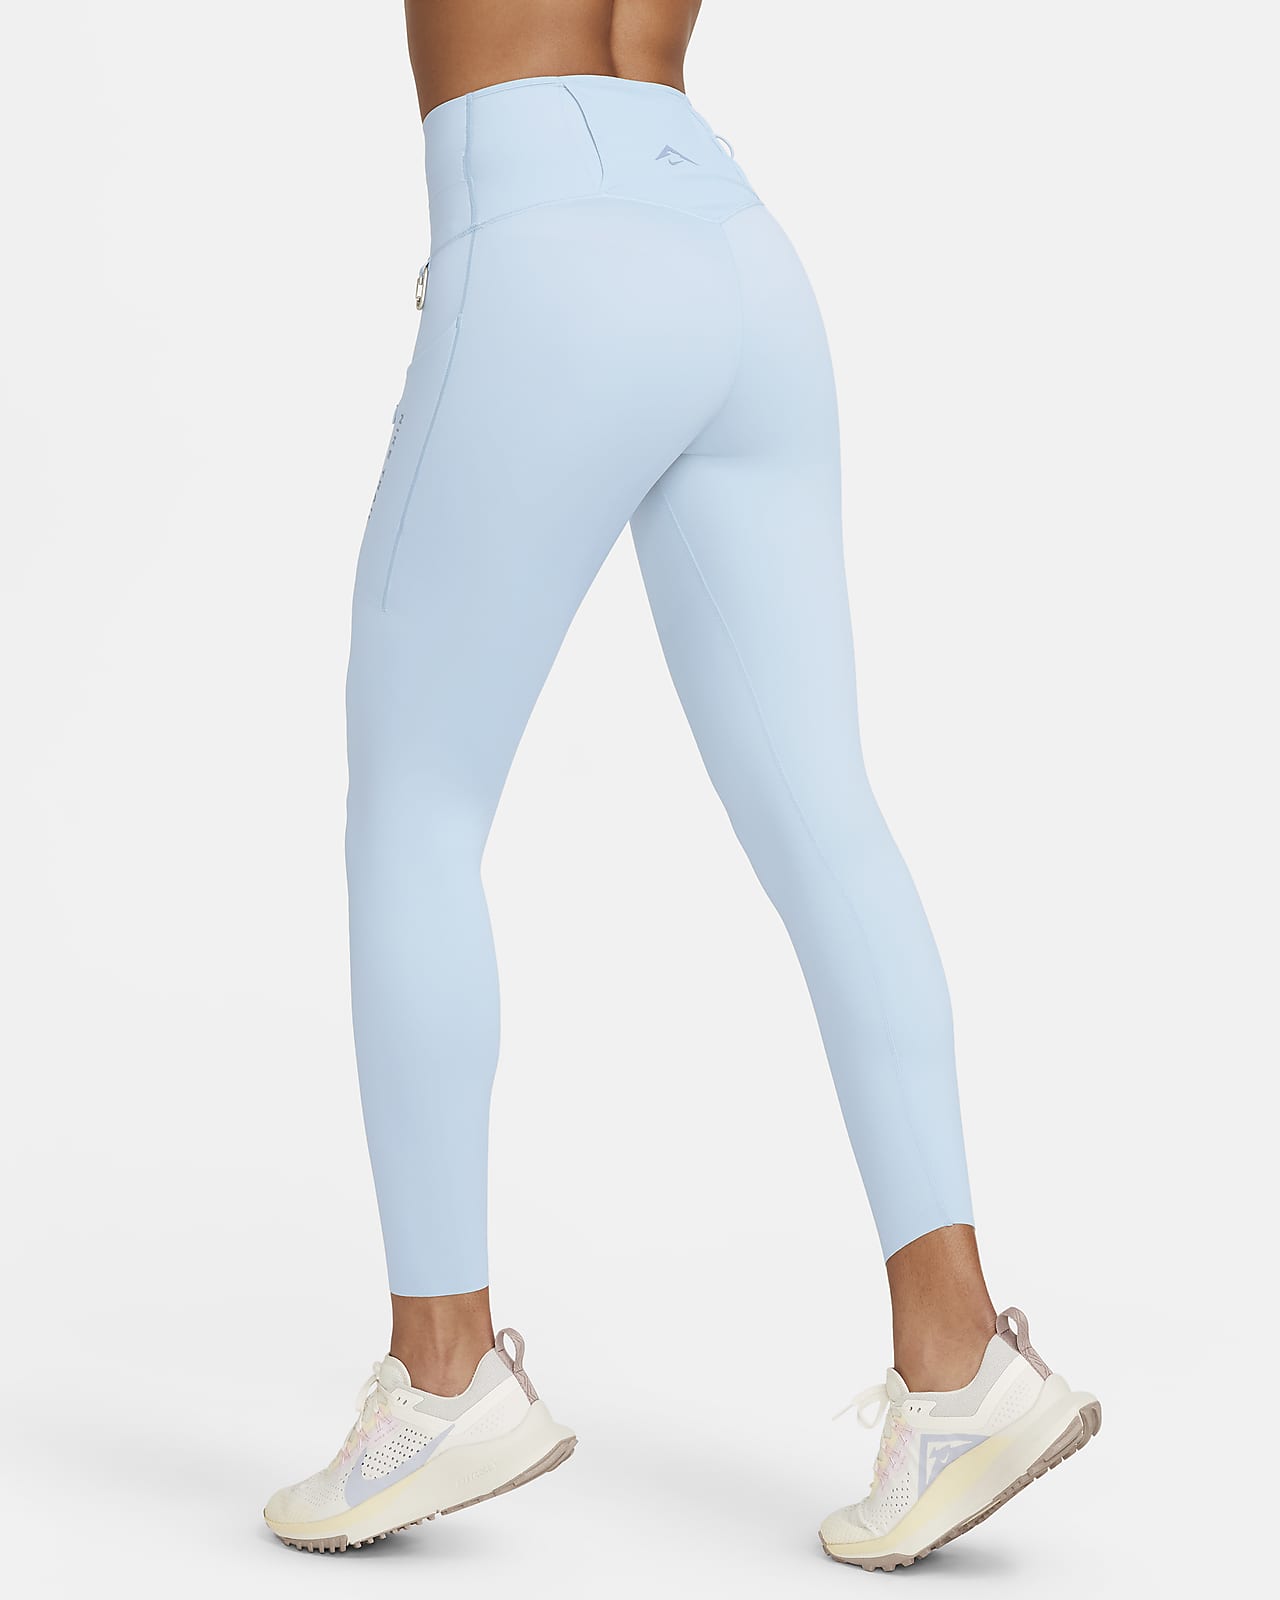 Nike Women's Dri-FIT Modern Rise Tech Crop Golf Pants (14, Light